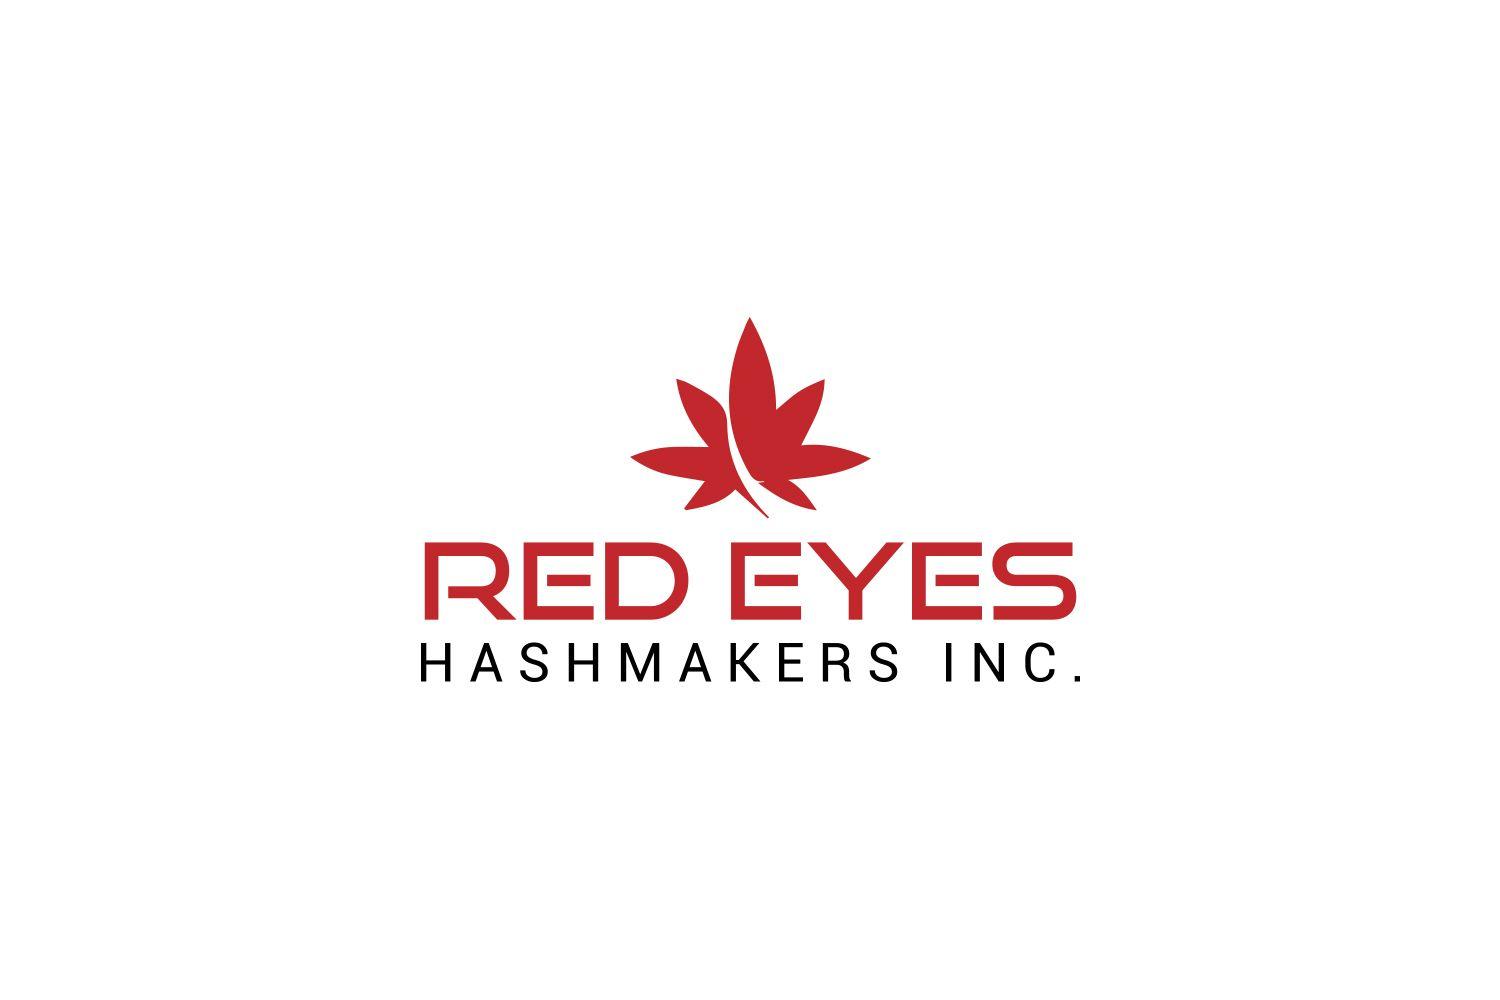 Red Maple Leaf Company Logo - Professional, Elegant, It Company Logo Design for Red Eyes